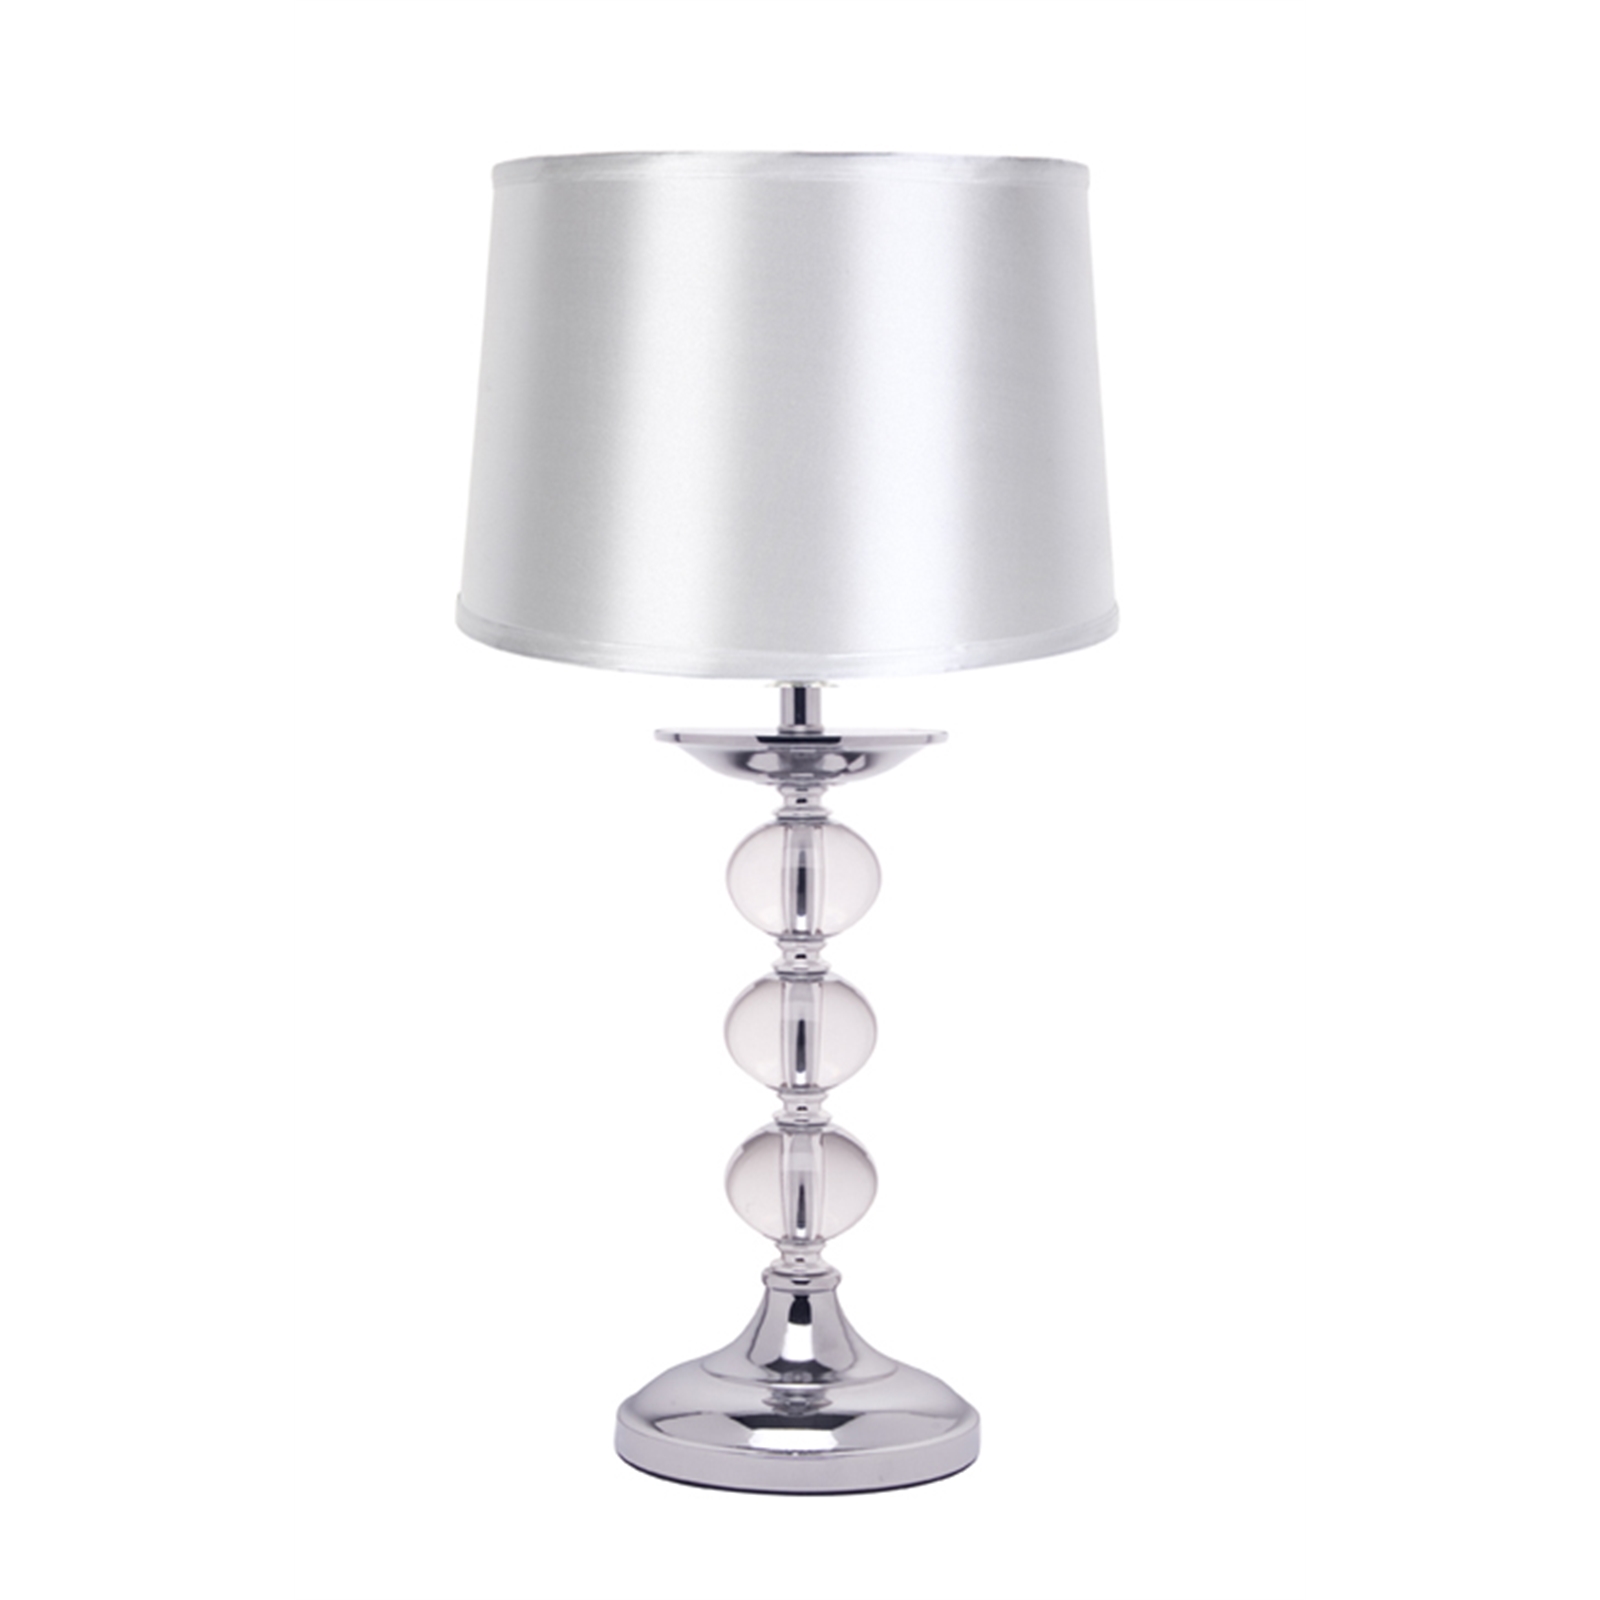 Cafe Lighting 60cm Empress White Table Lamp